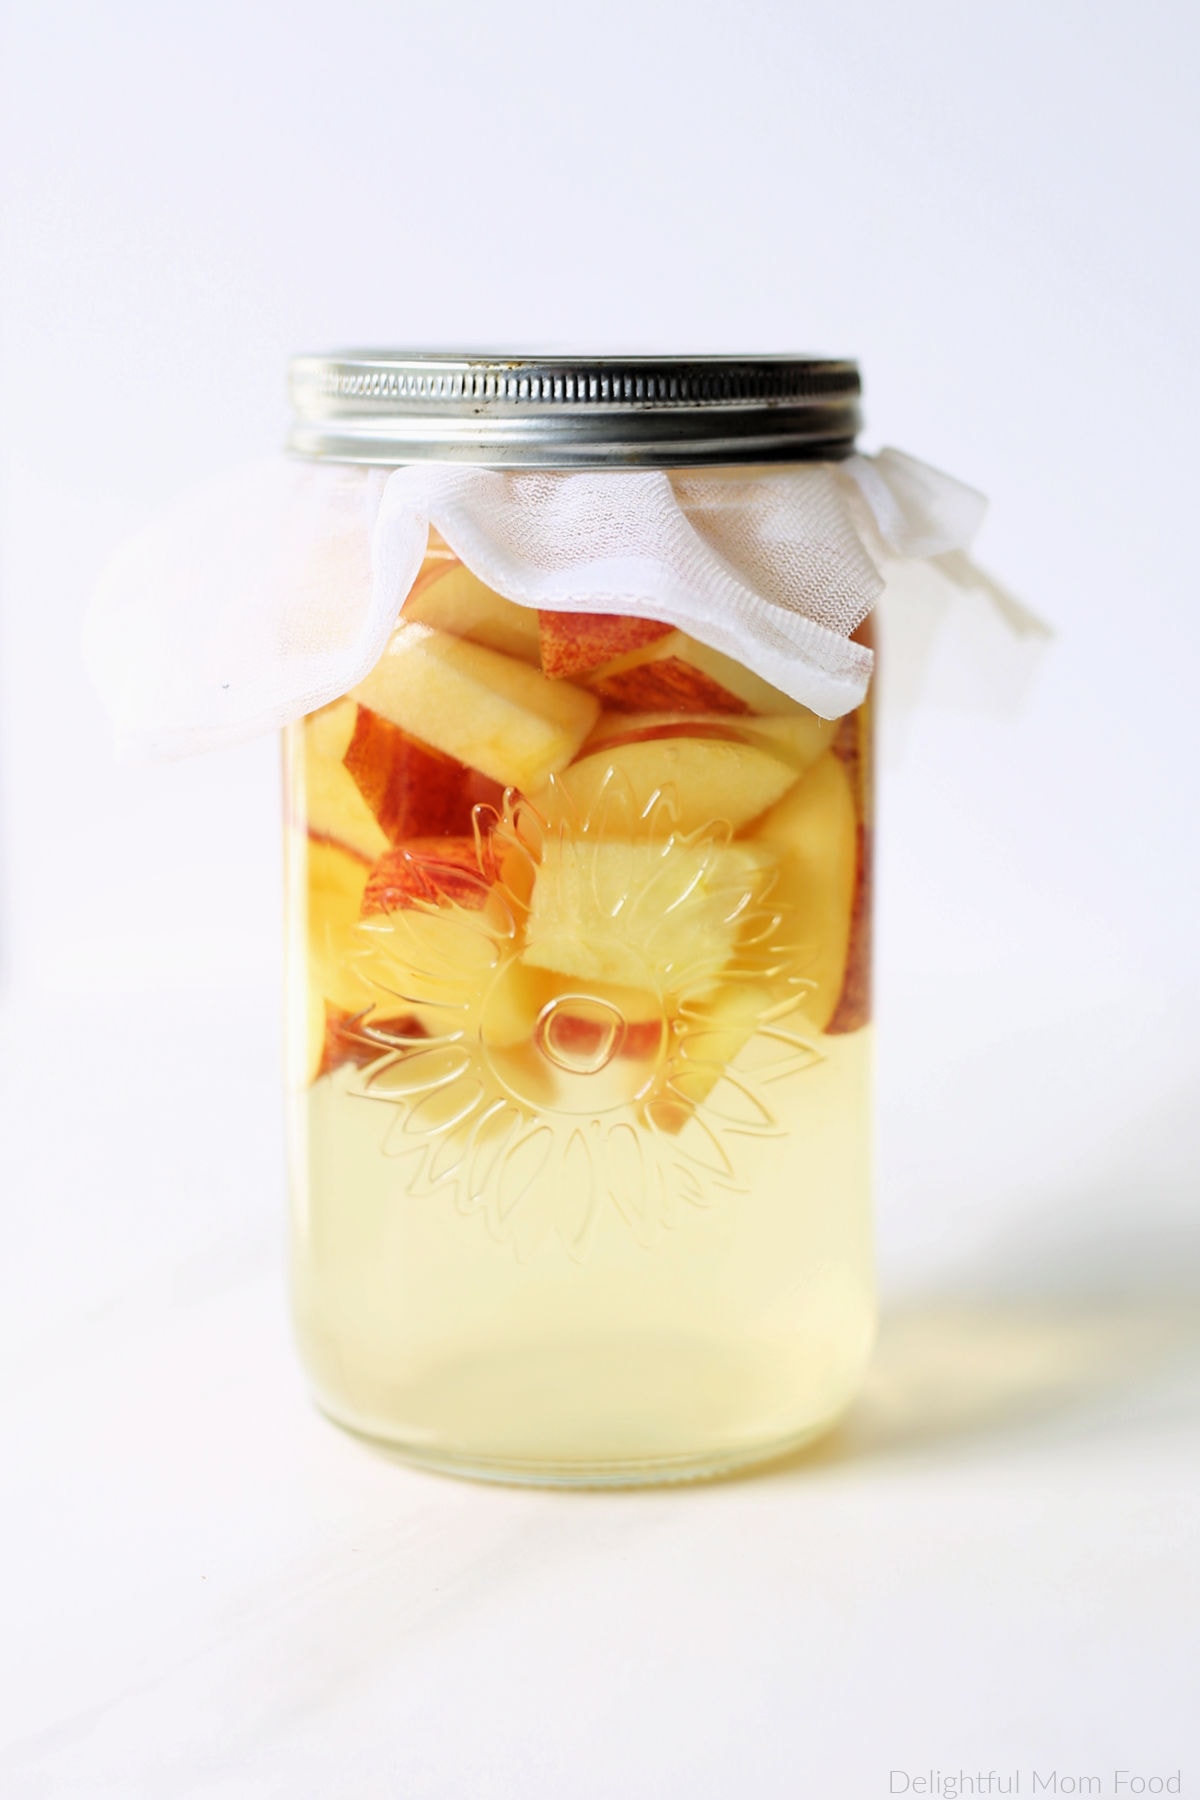 apples turning to hard apple cider to vinegar in a mason jar